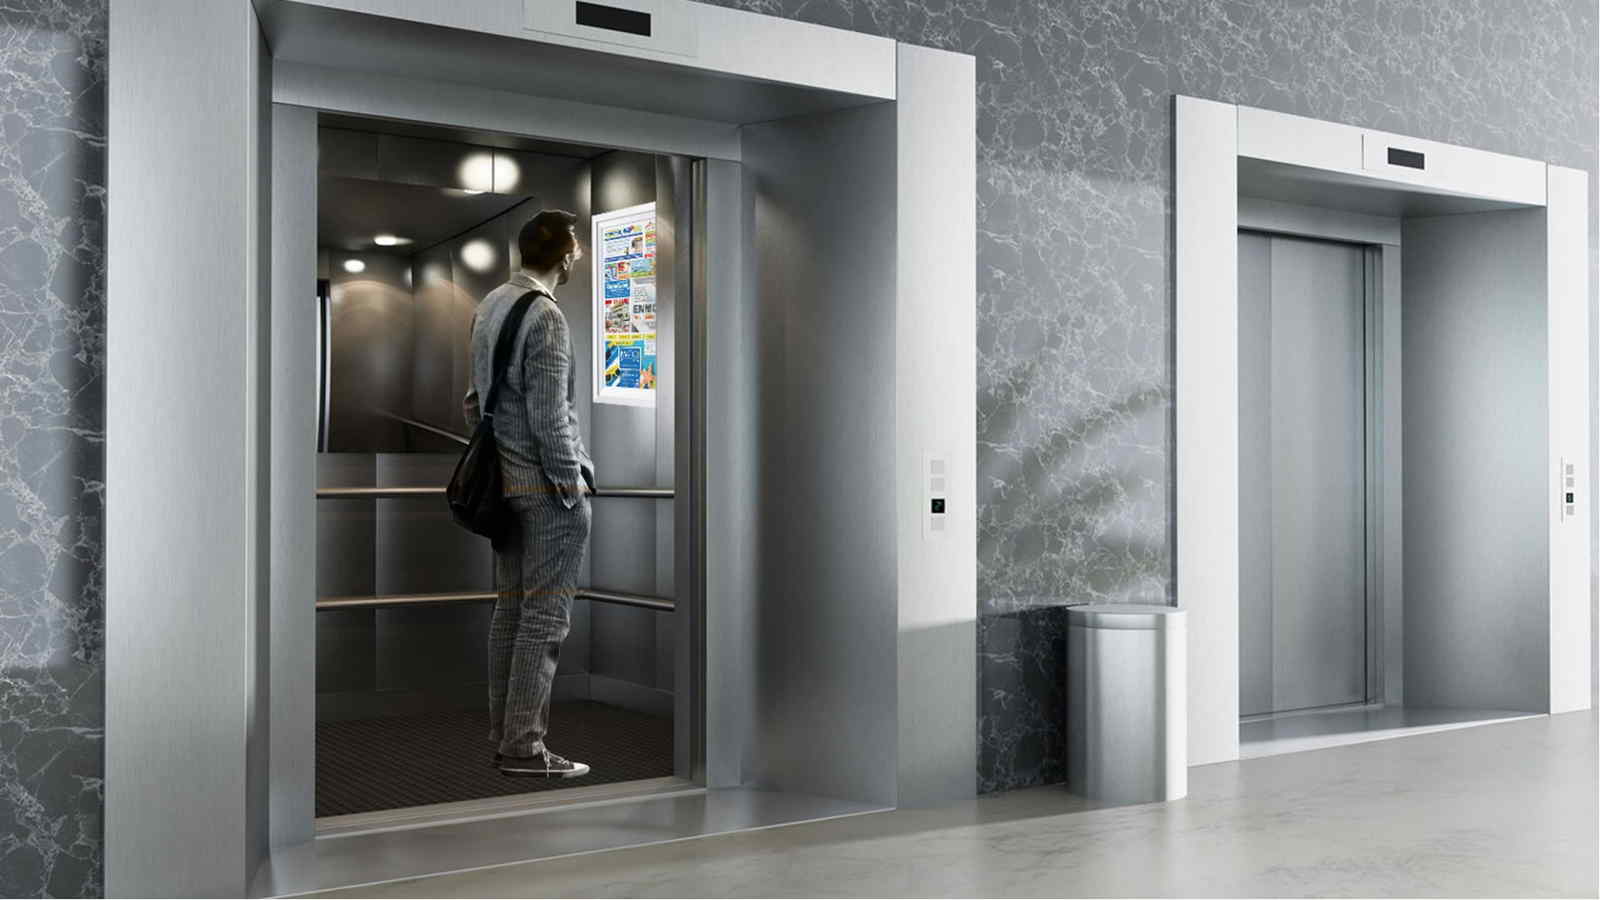 Эффективна ли реклама в лифтах? Отзывы тех, кто давал и читал рекламу в лифтах